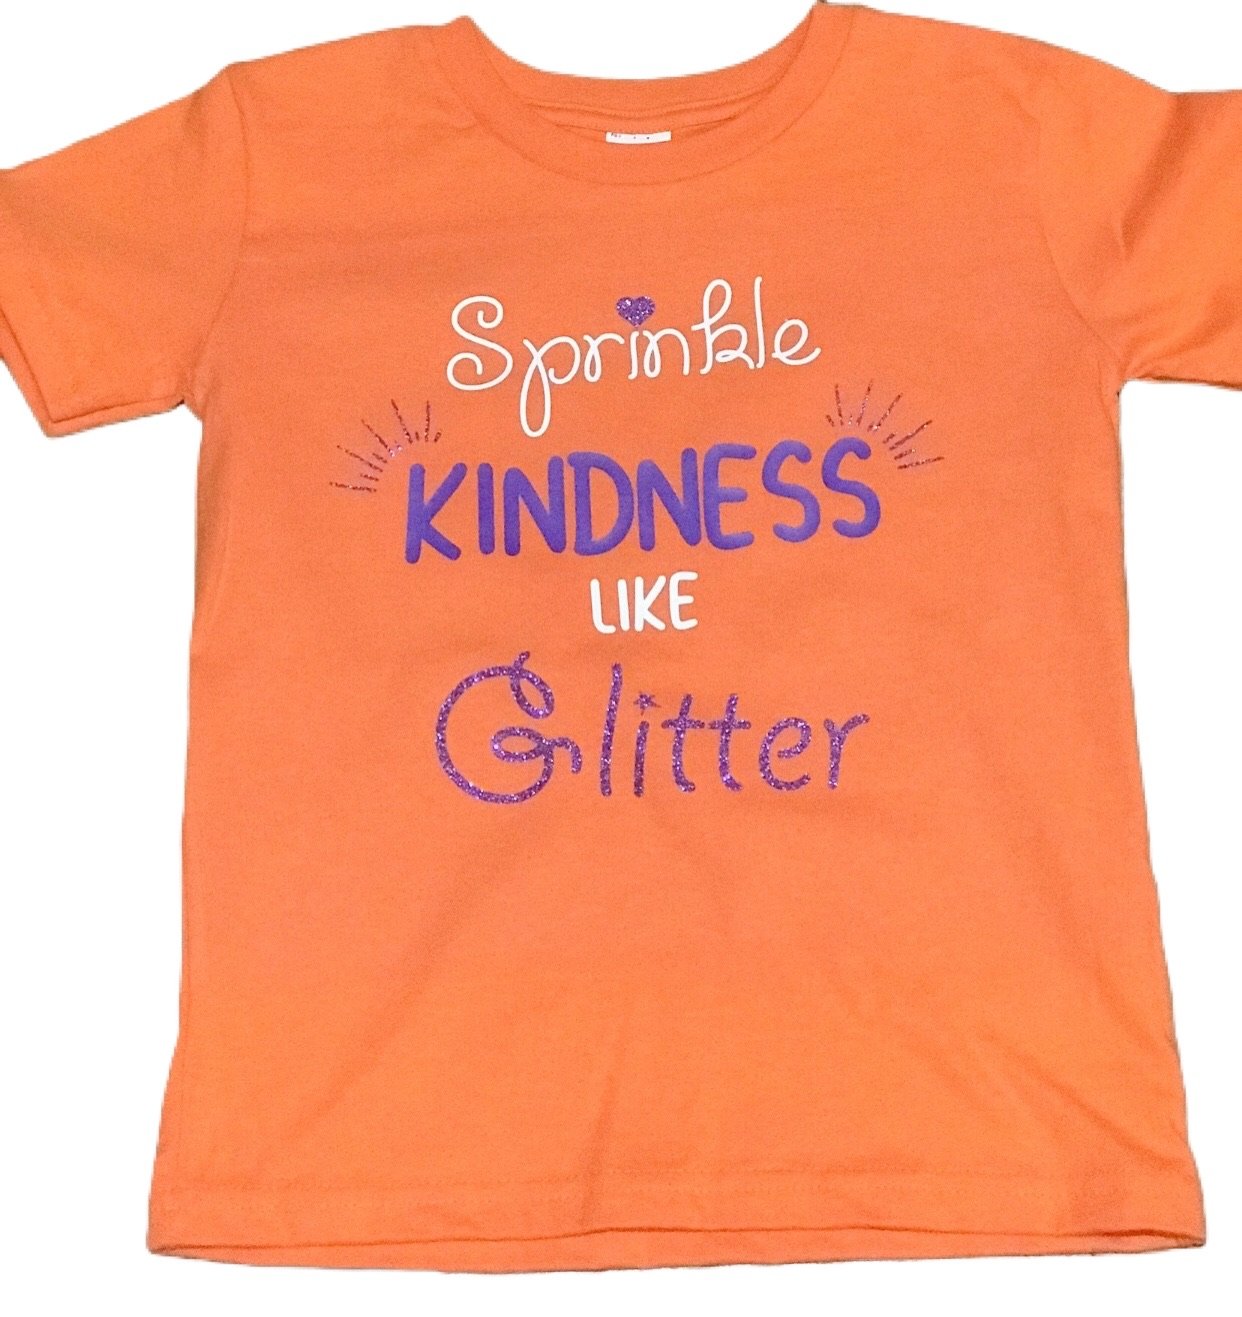 Sprinkle Kindness like Glitter